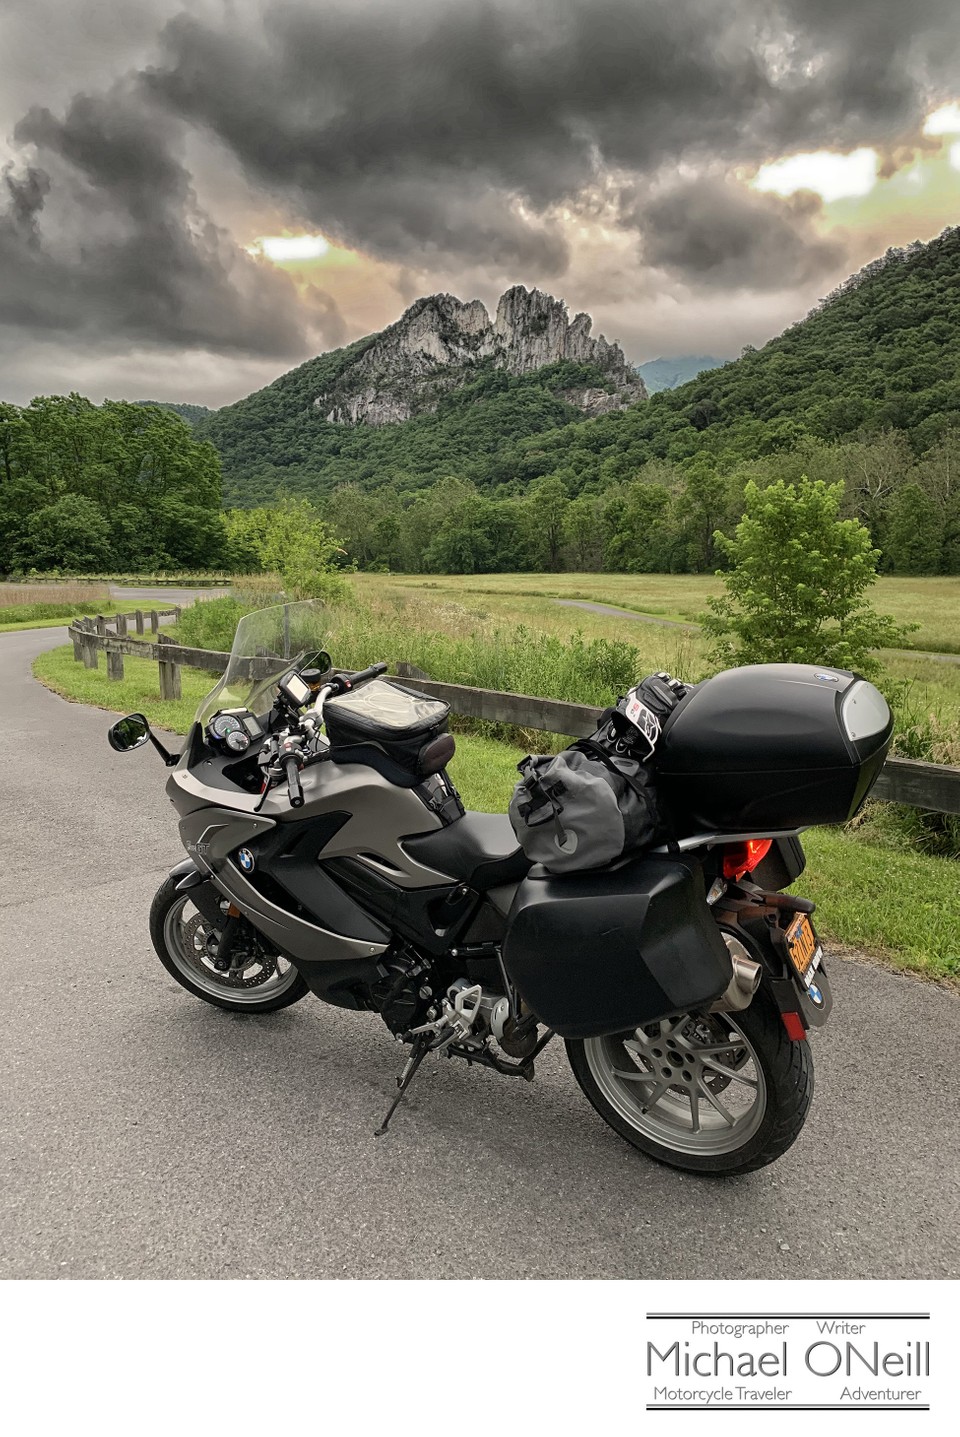 Seneca Rocks West Virginia Motorcycle Road Trip Photos Adventure Writer